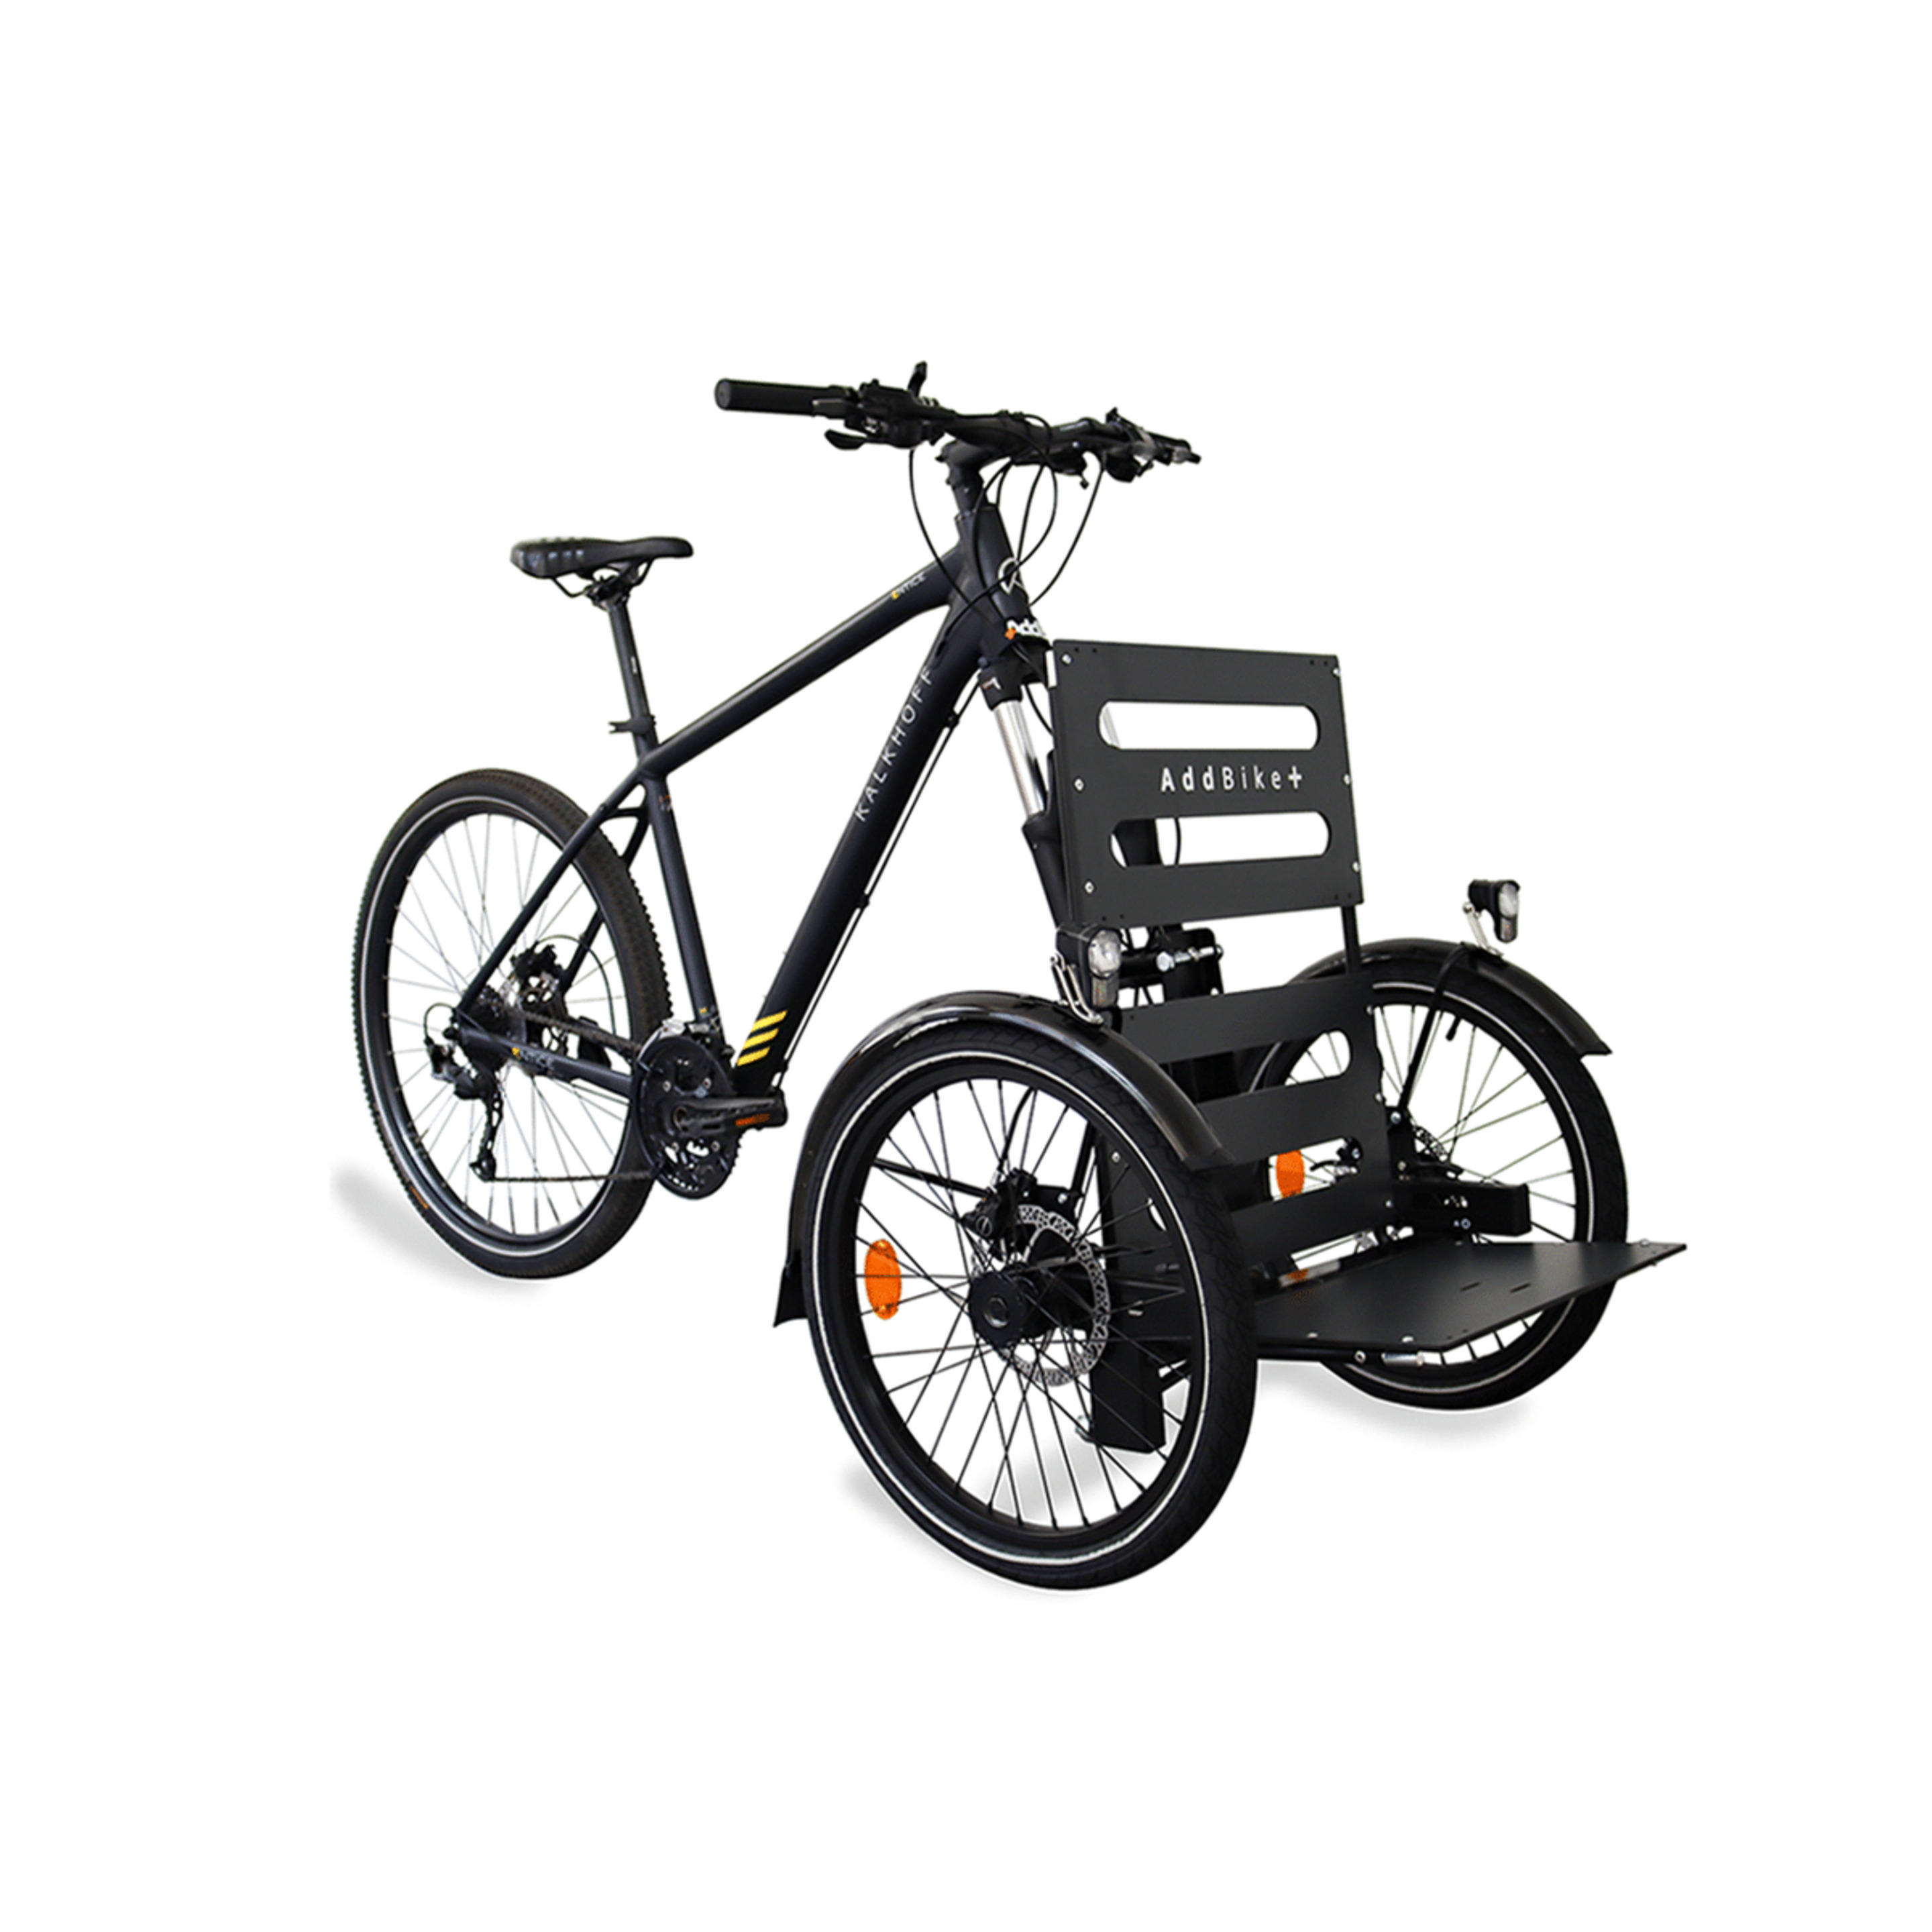 Kit De Reboque De Bicicleta Frontal - Addbike Addbike+ - Cinzento/Preto - Kit de reboque de bicicleta frontal | Sport Zone MKP